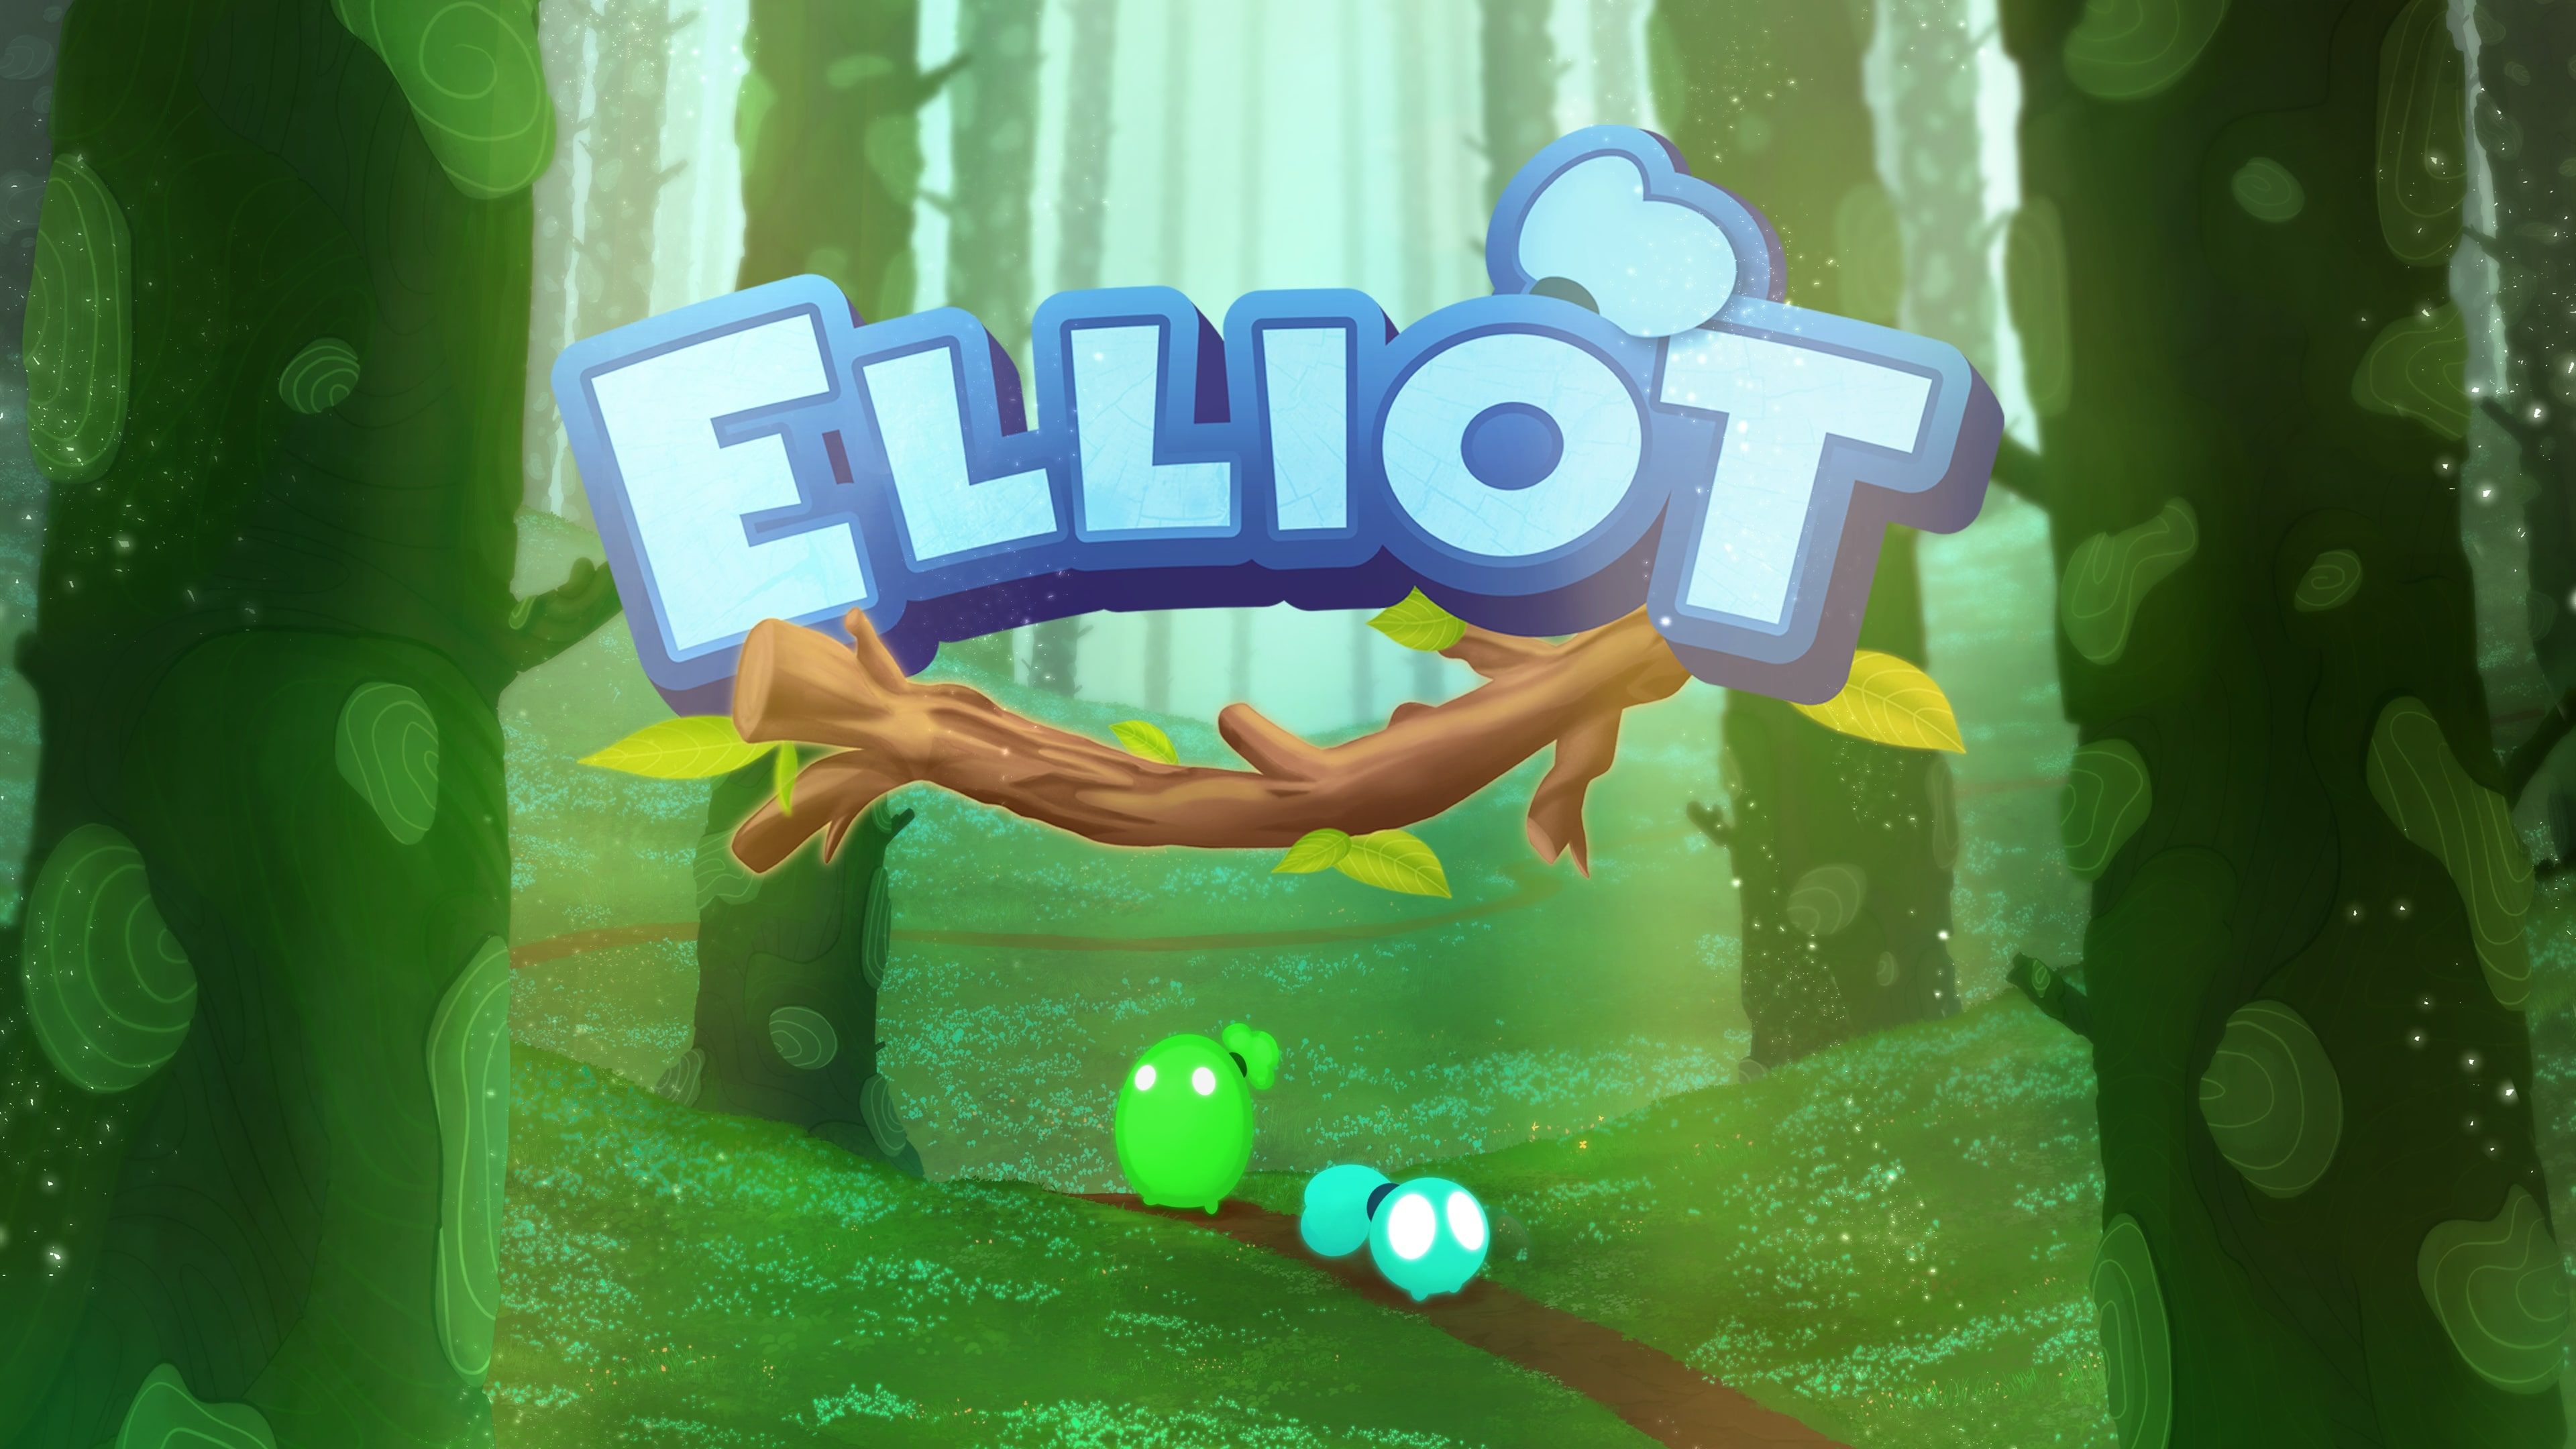 Elliot cover image